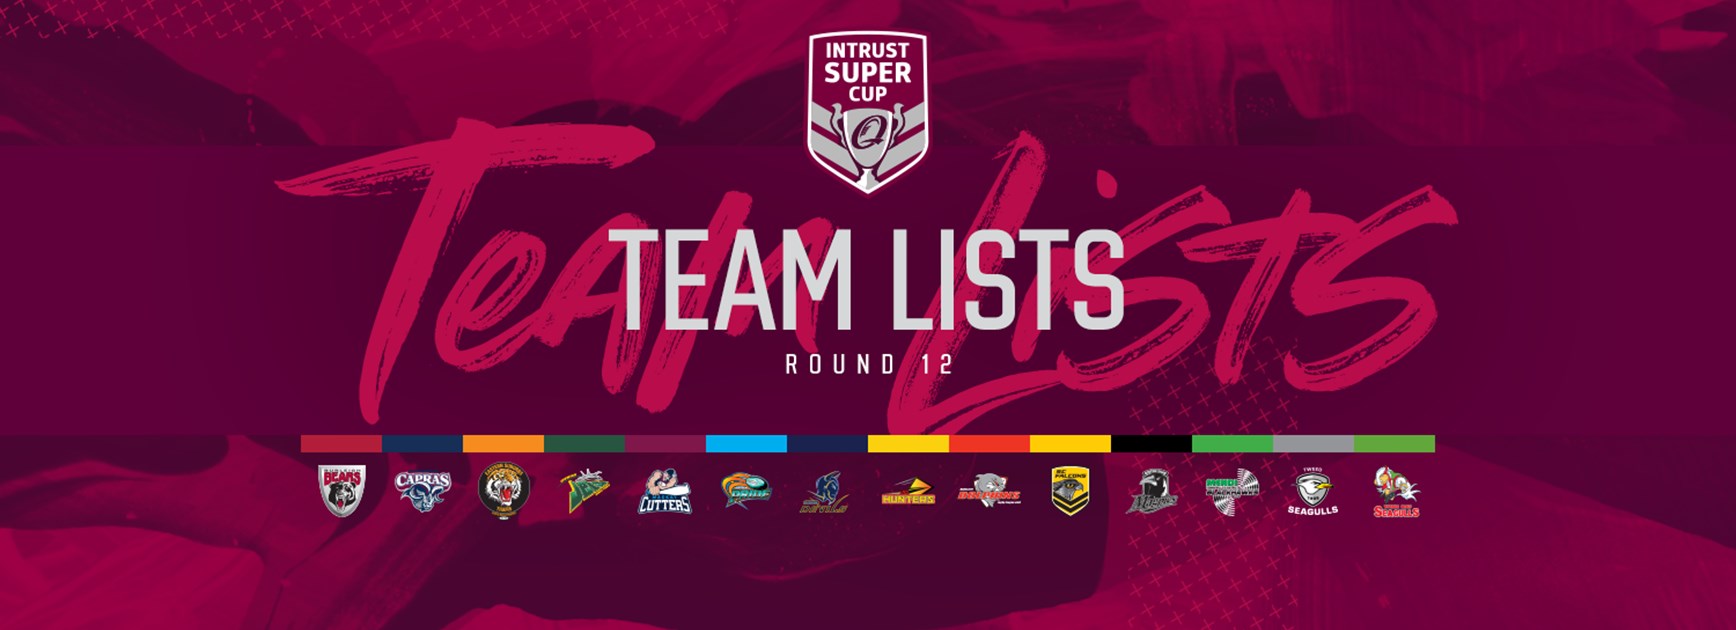 Intrust Super Cup Round 12 team lists